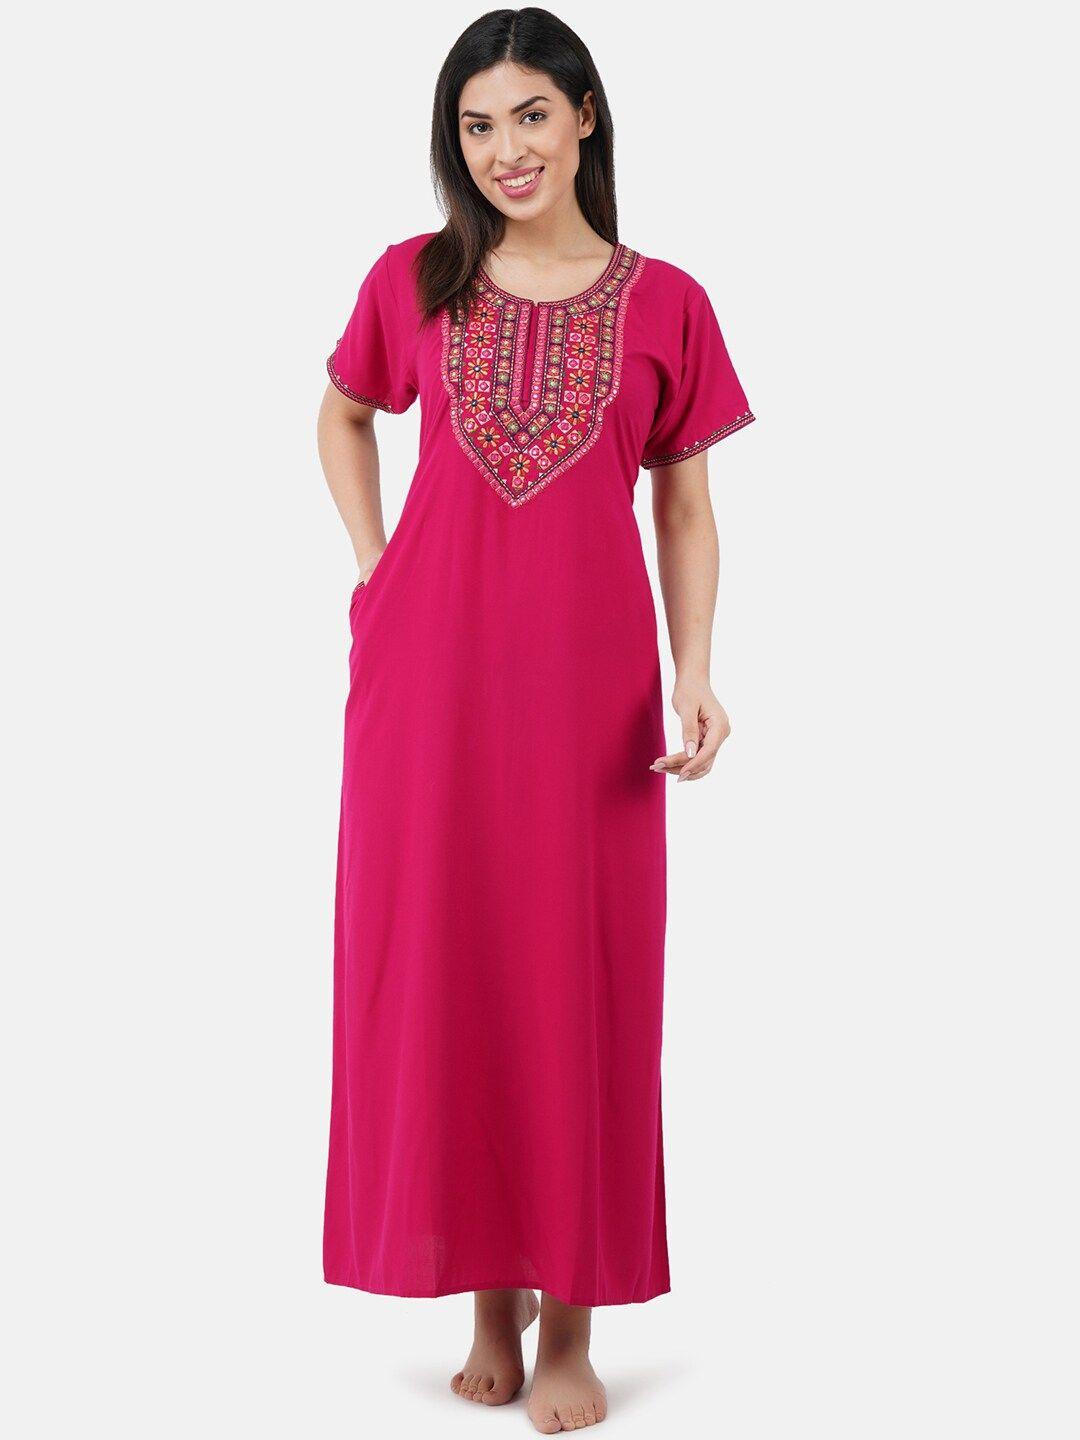 koi-sleepwear-pink-embroidered-nightdress